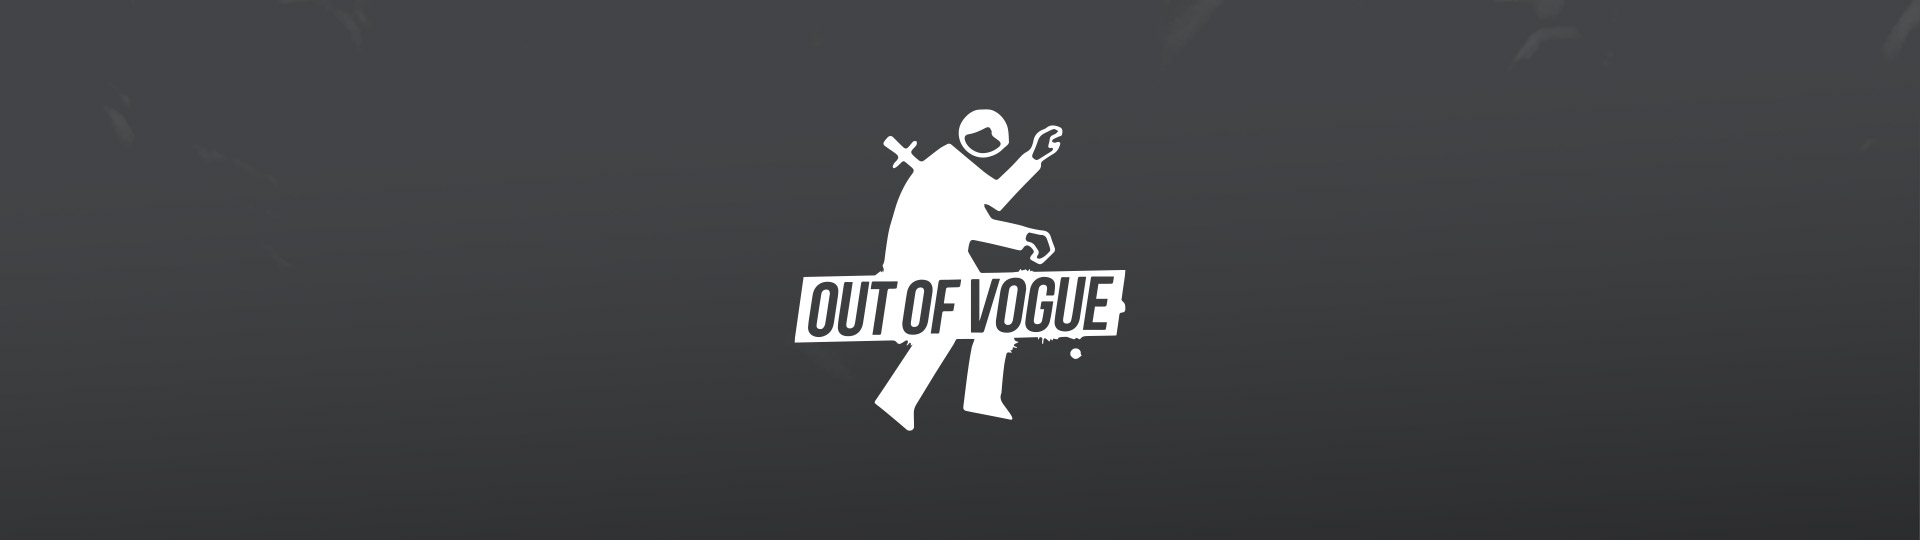 Out Of Vogue at OUT OF VOGUE SHOP / EN